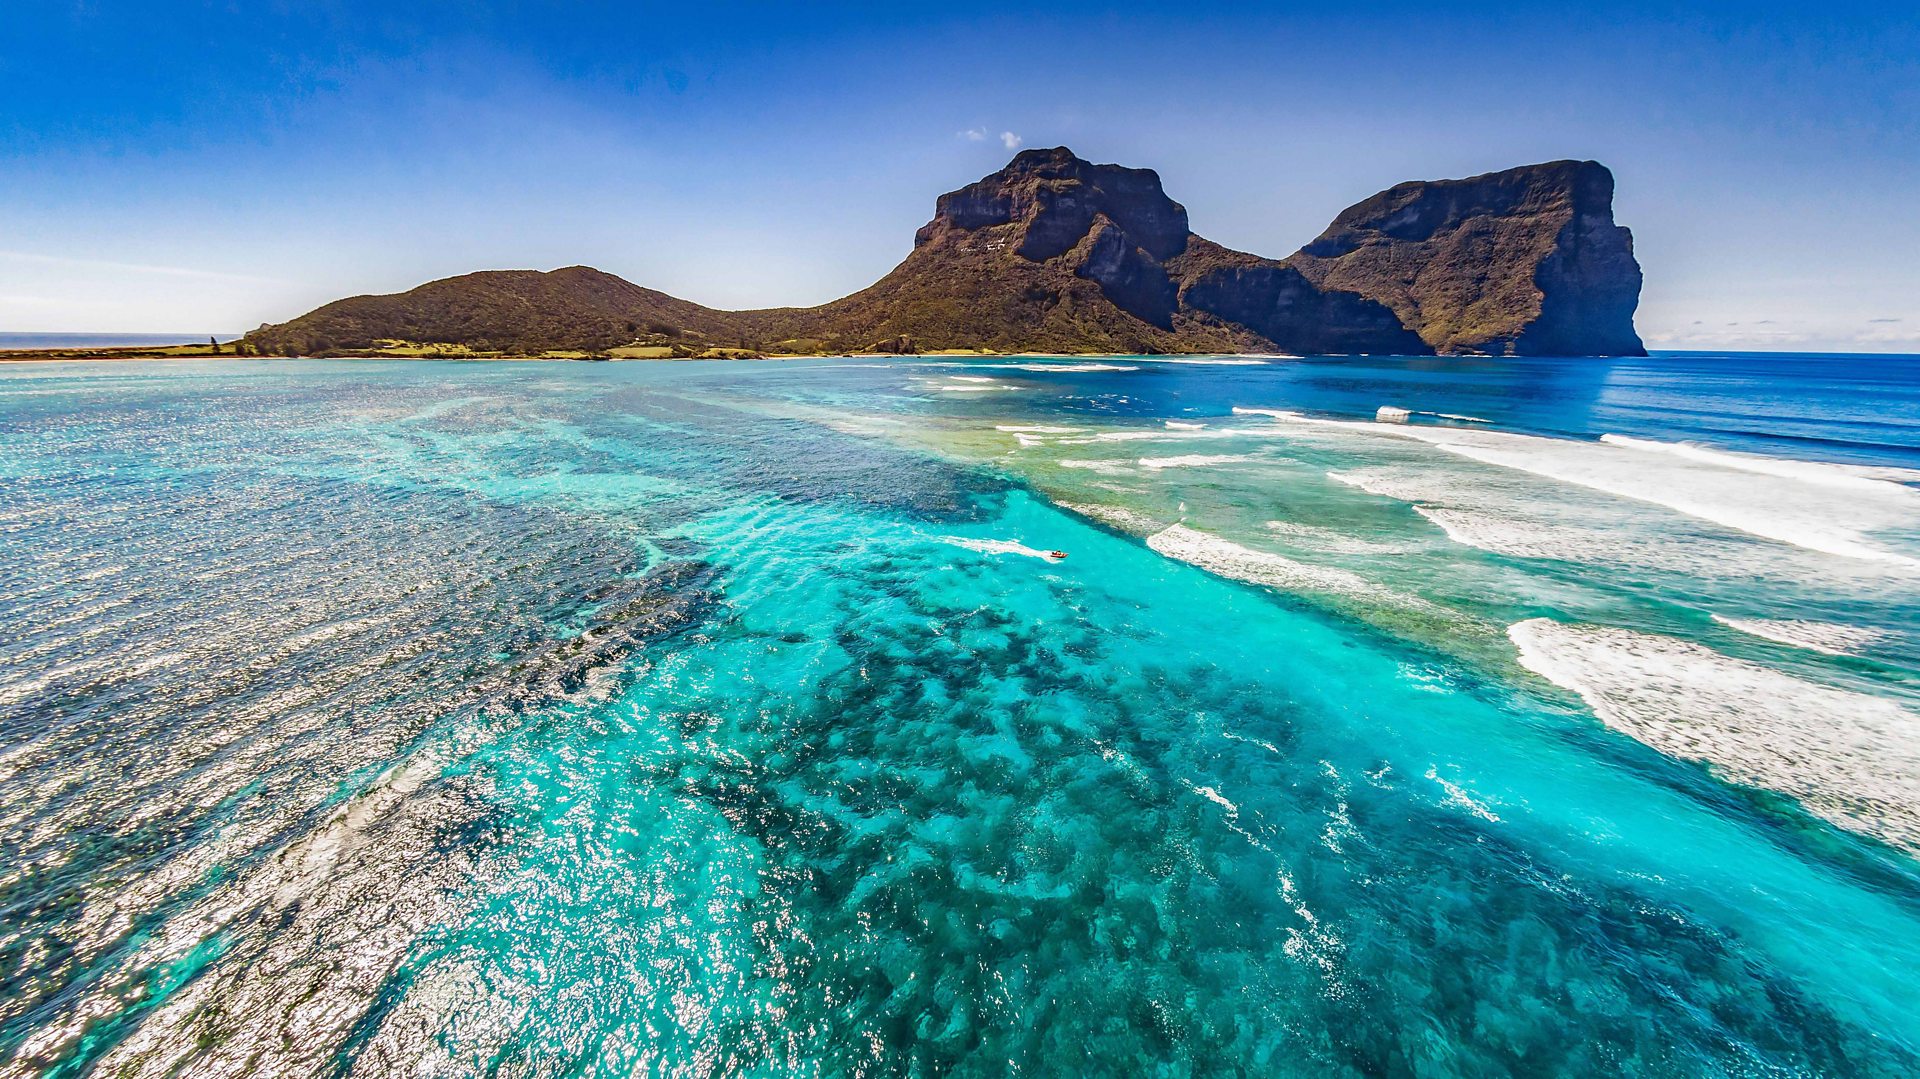 Australia's Lord Howe Island